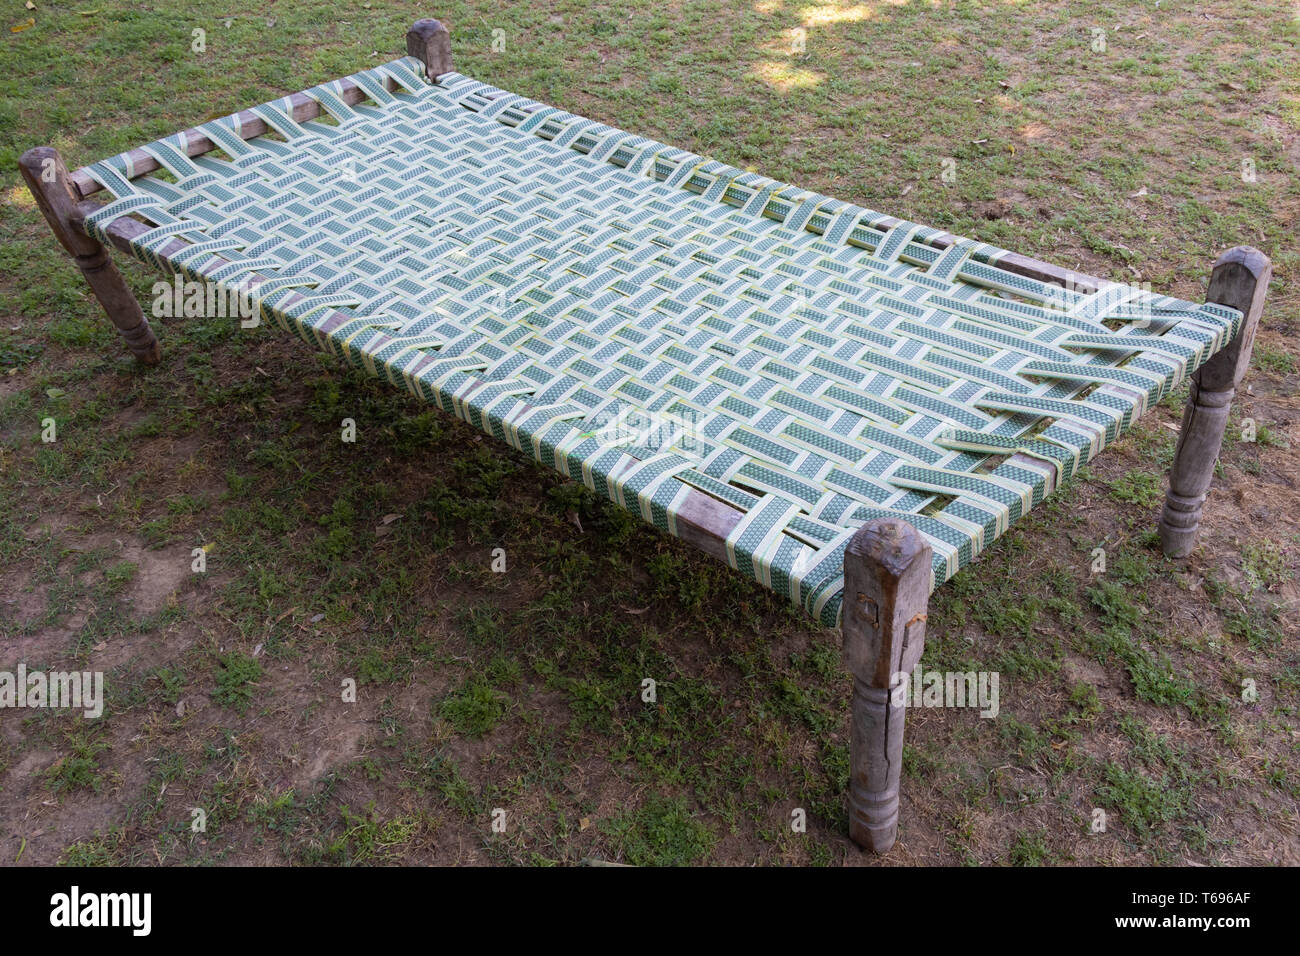 https://c8.alamy.com/comp/T696AF/traditional-homemade-wooden-plastic-rope-bed-lying-in-outside-T696AF.jpg